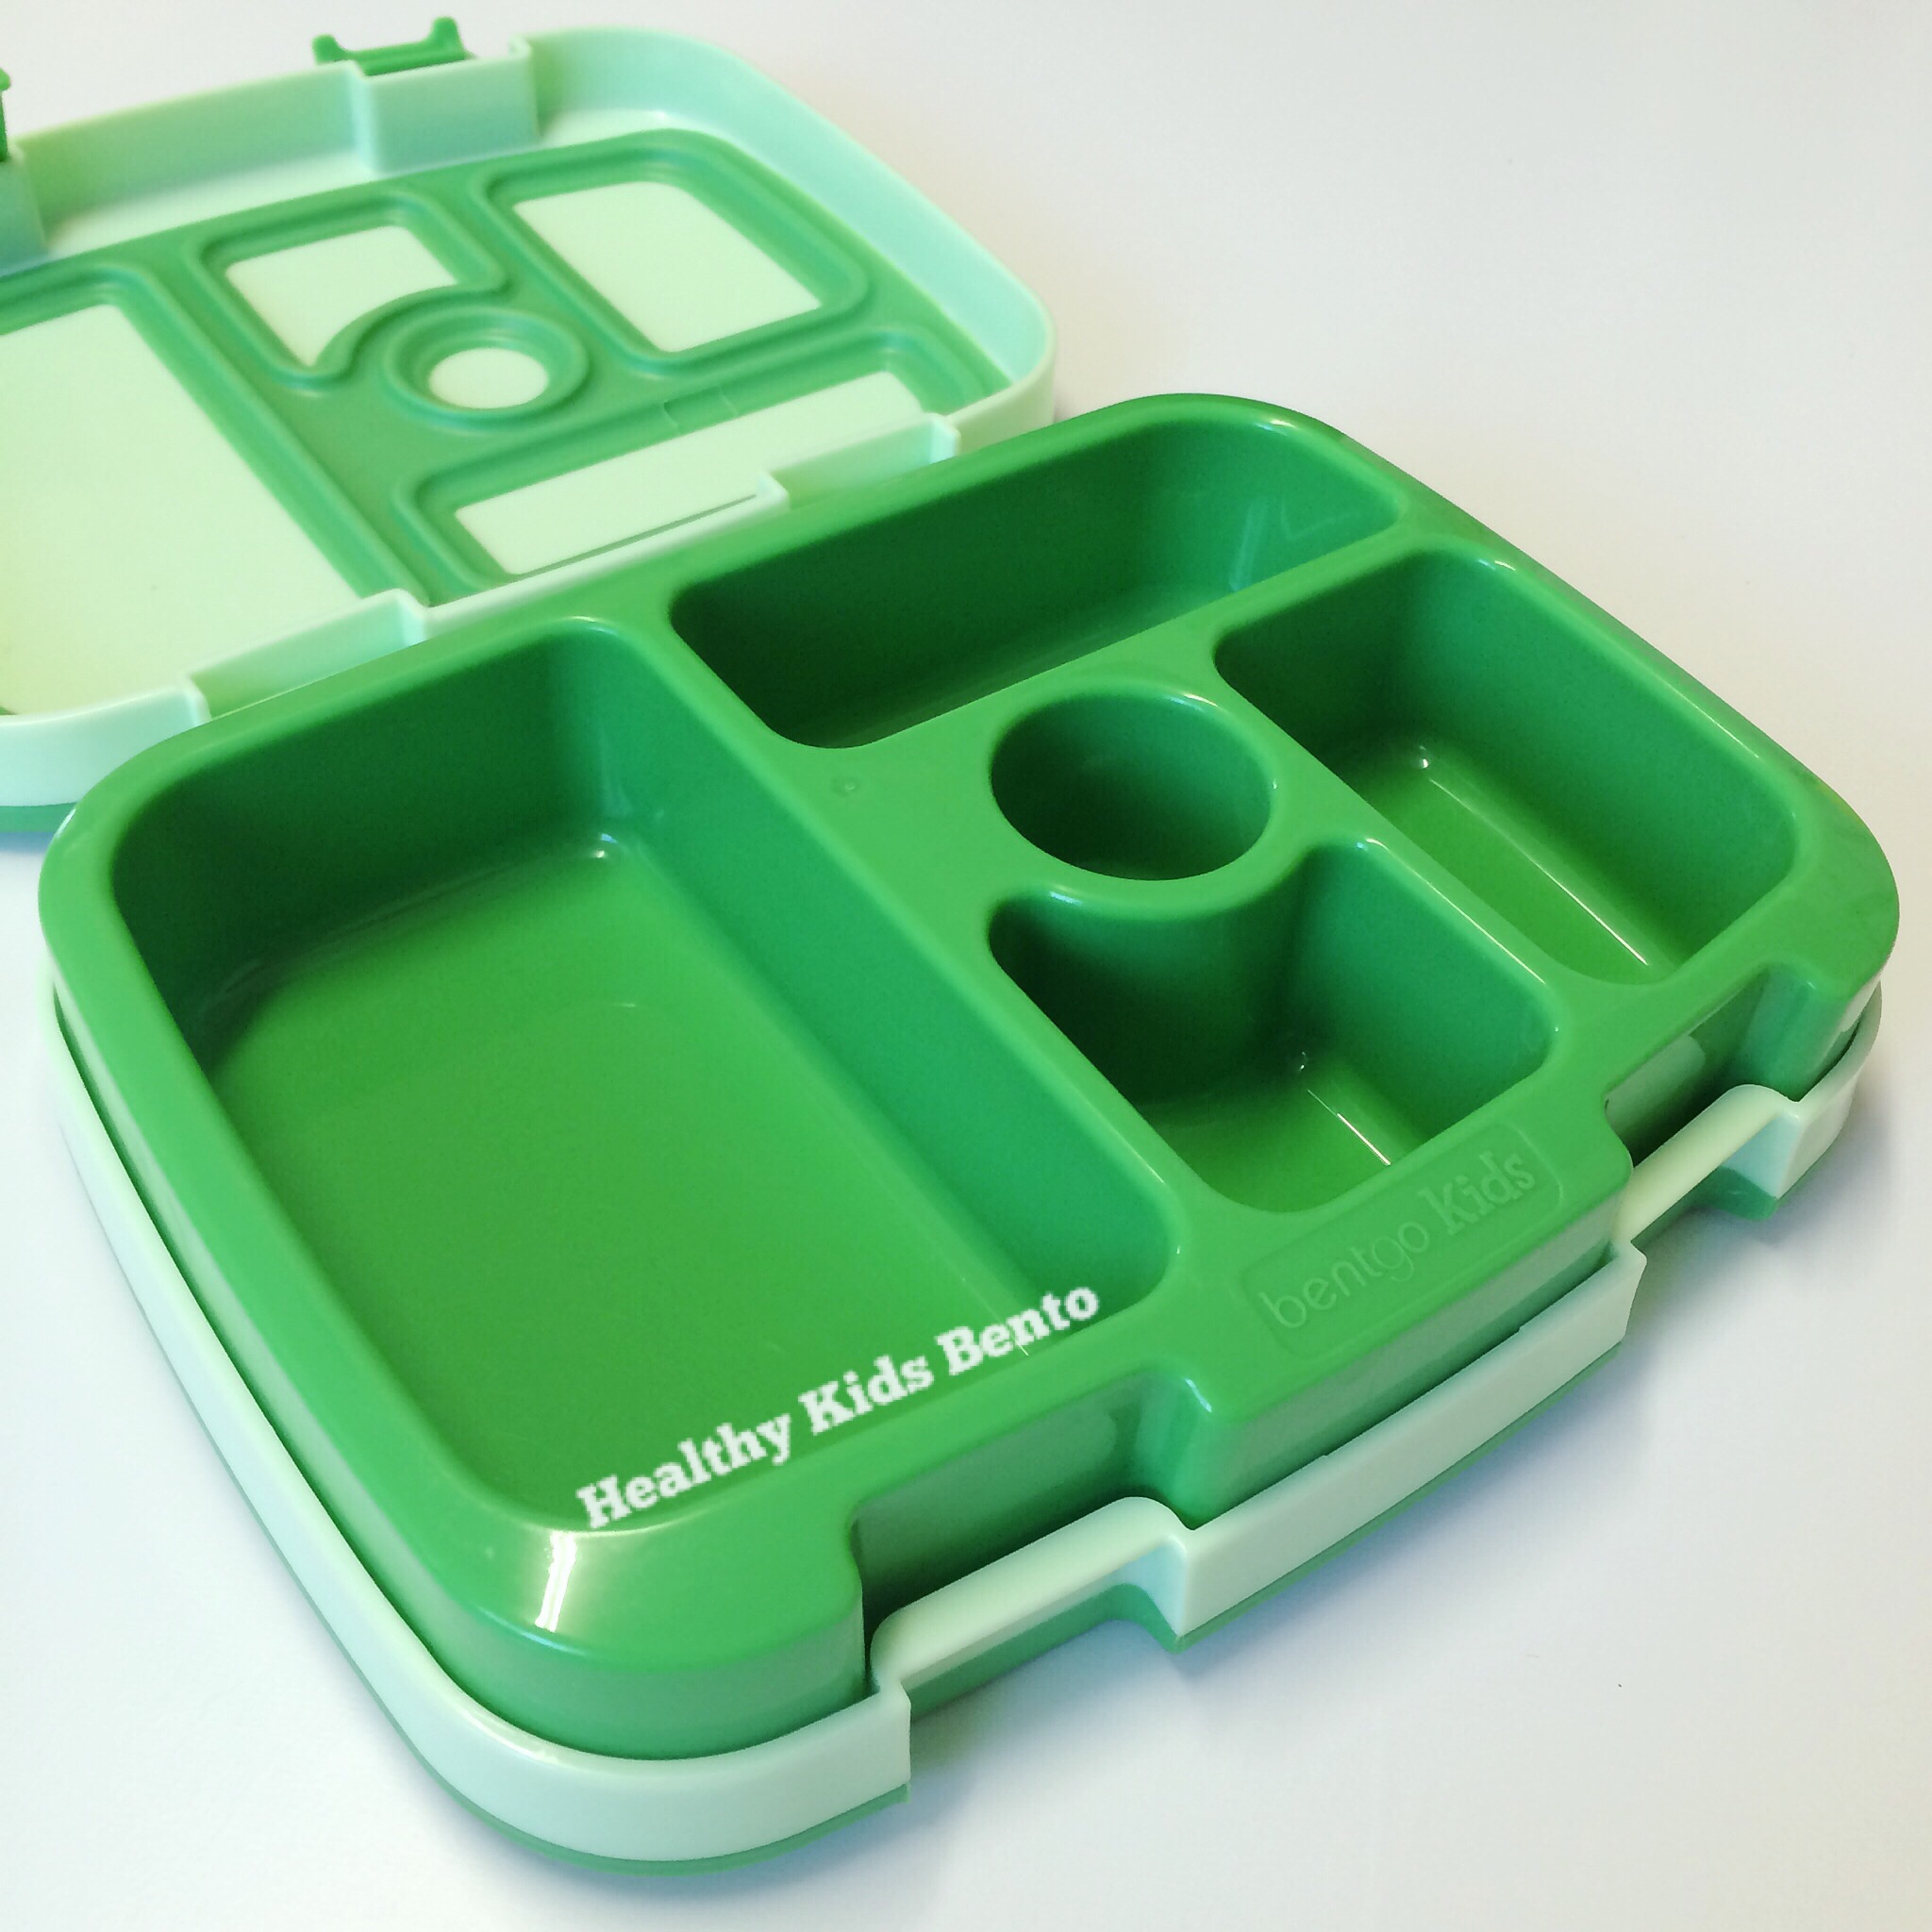 Bentgo Kids Lunchbox Review